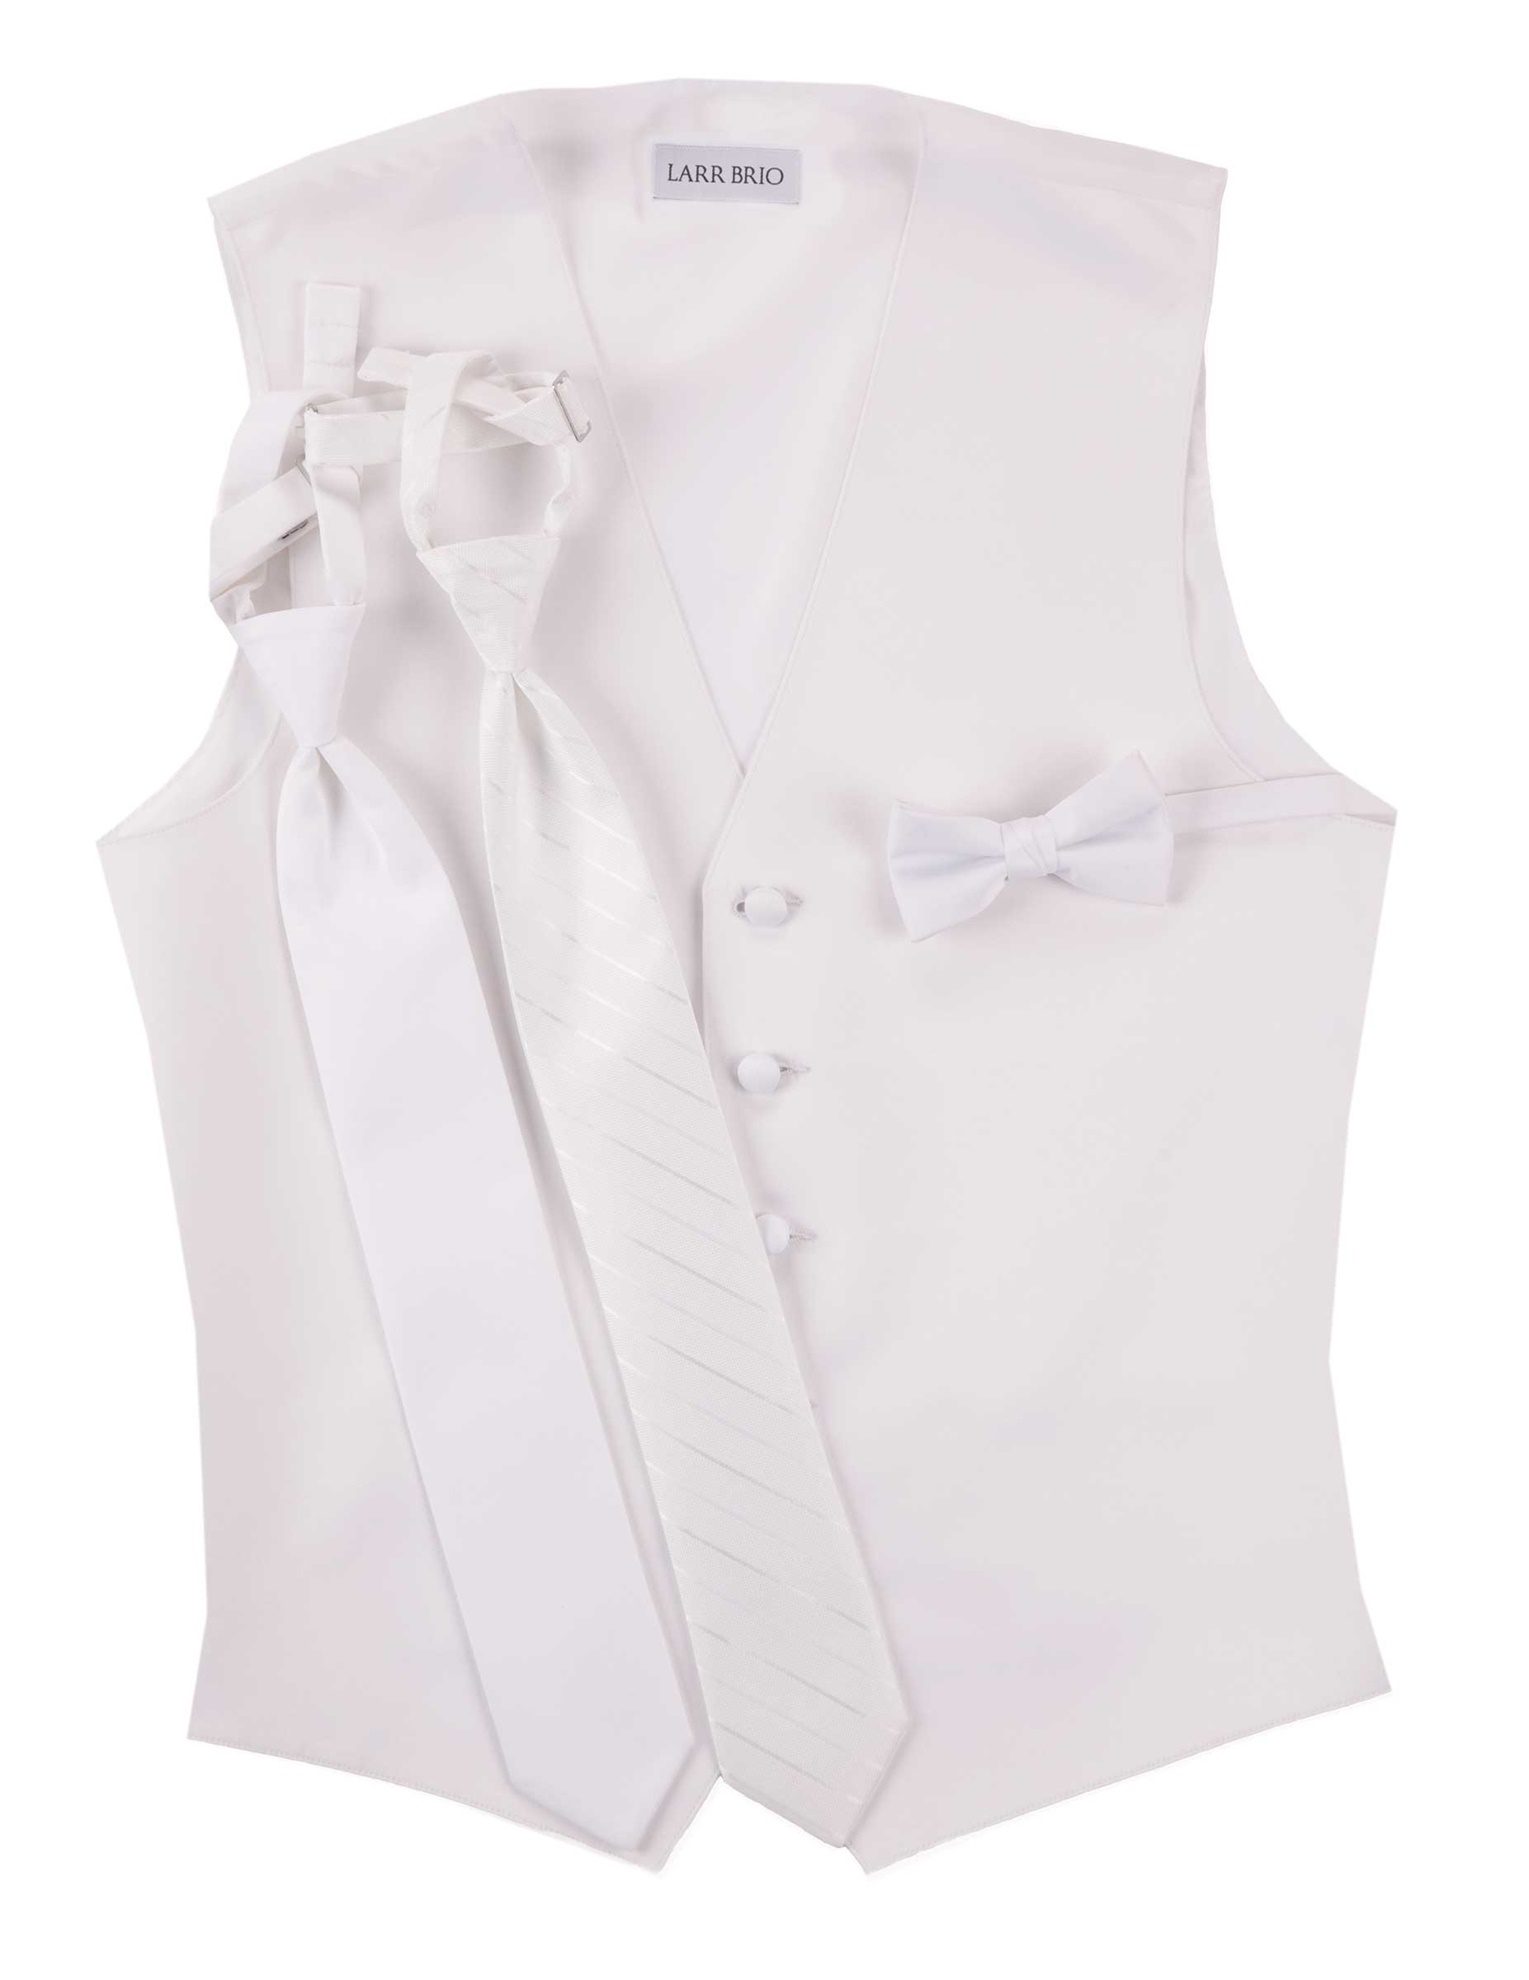 Simply Solid White Vest Ties Larr Brio